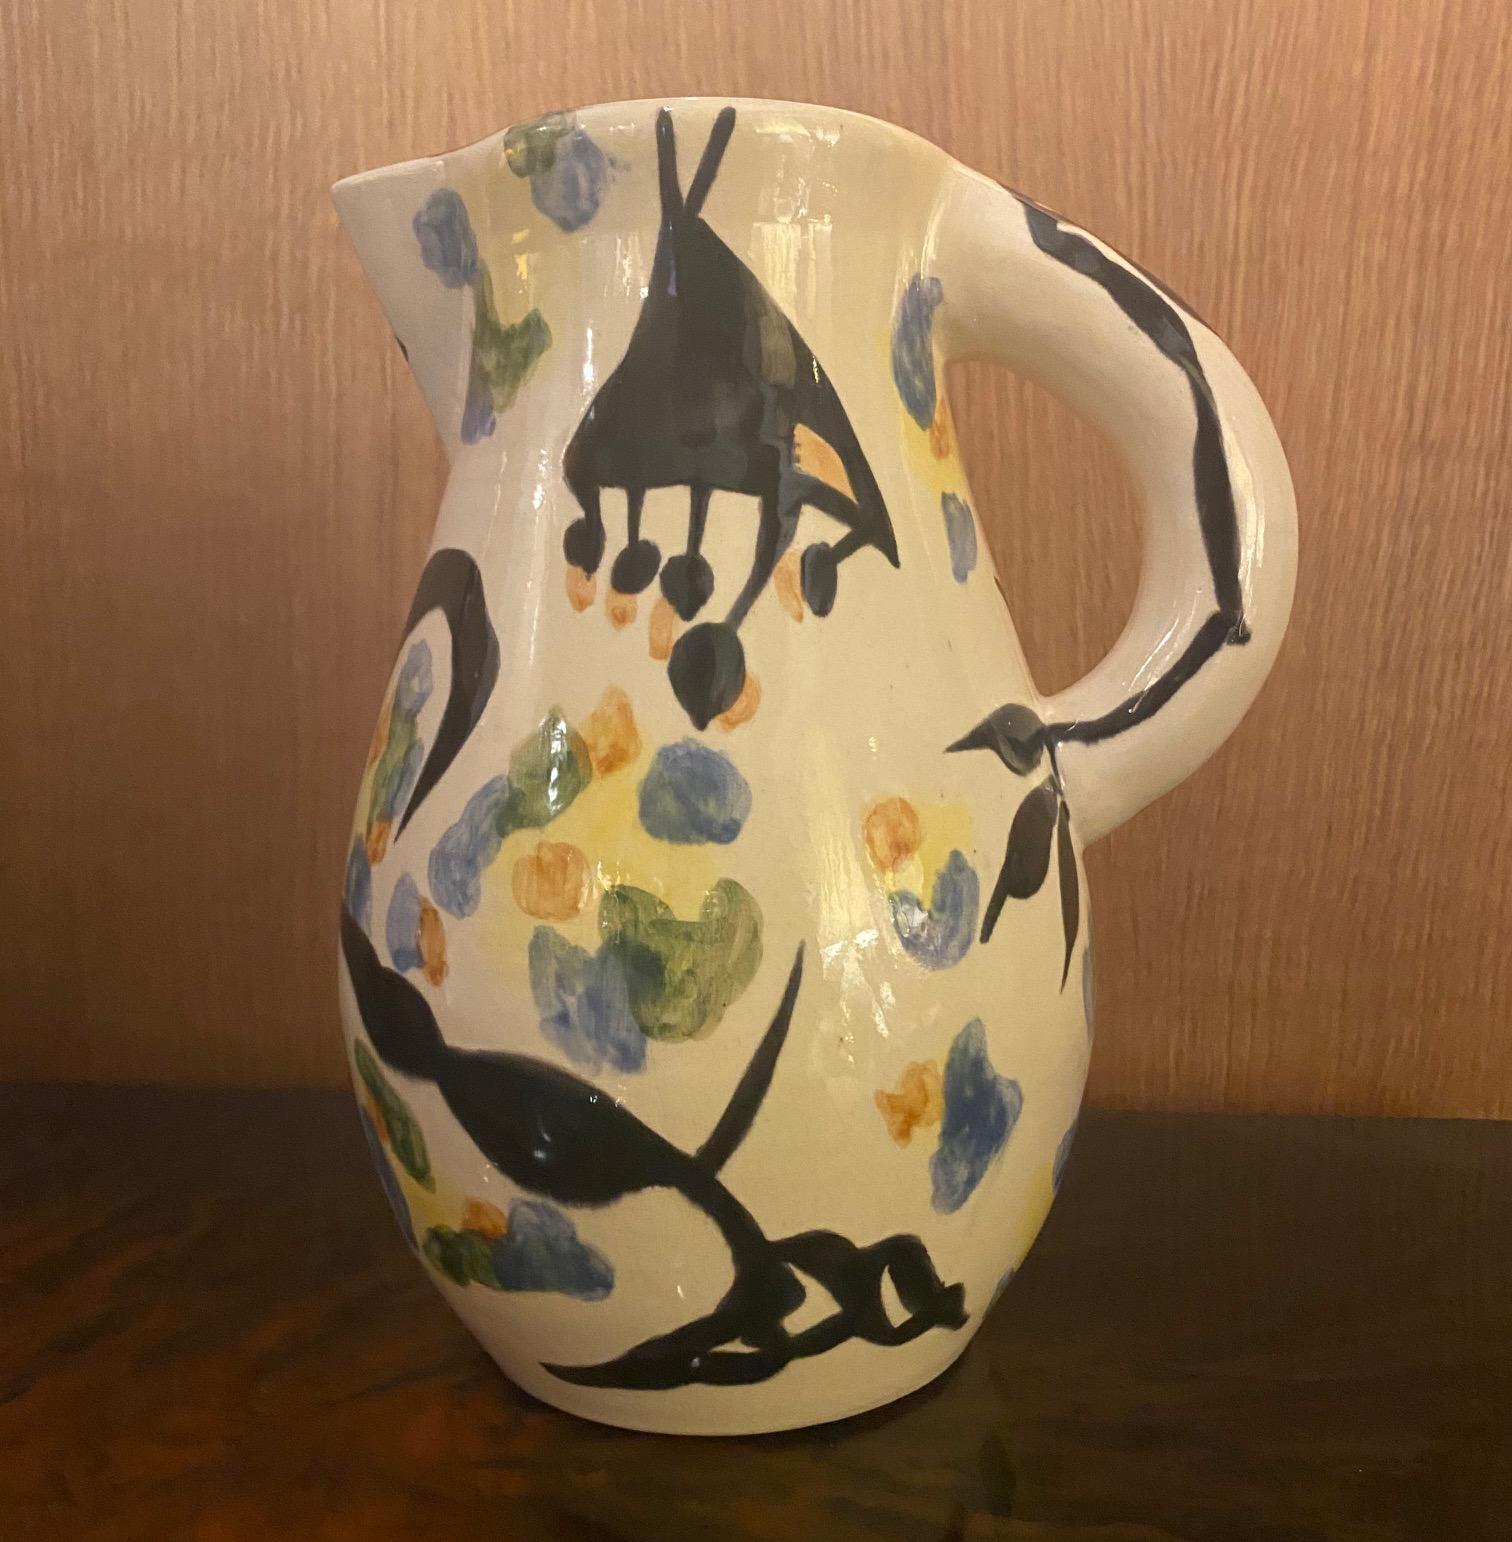 French Ceramic Pitcher by Jean Lurçat, France, 1950-60s